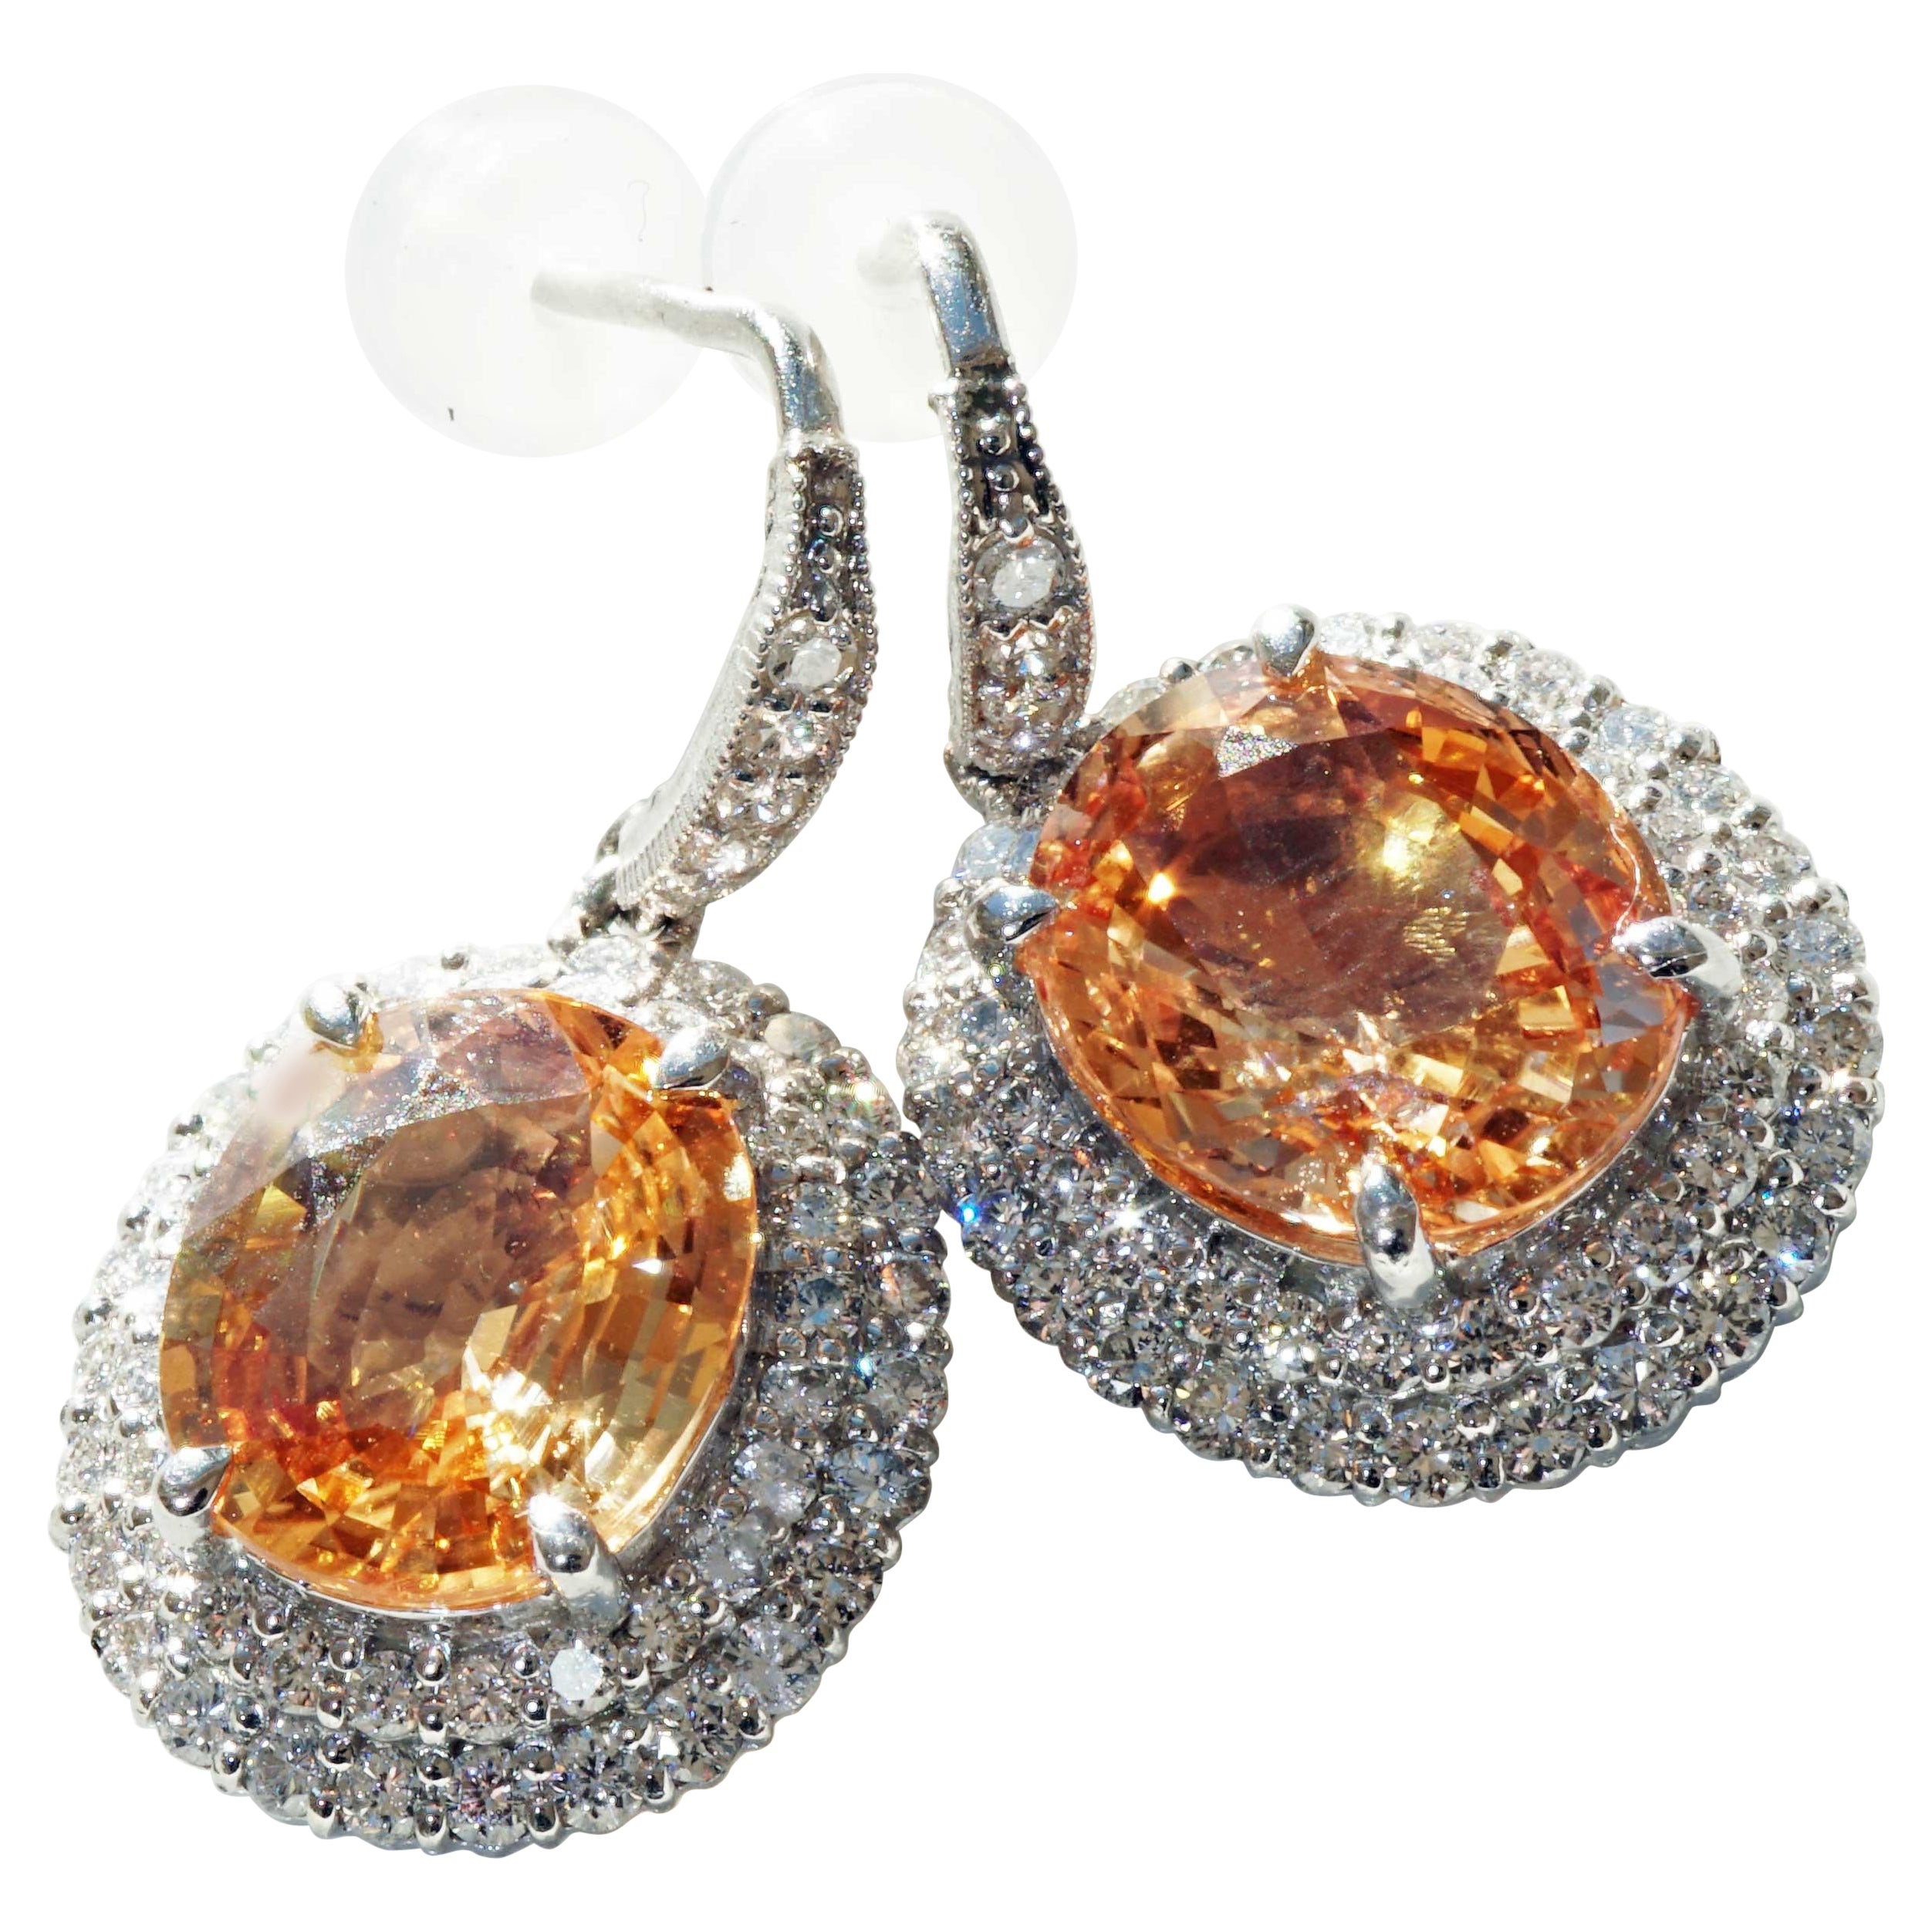 Saphire Brilliant Earrings 900 Platinum orange-pink 7.14 1.14ct incredible Color For Sale